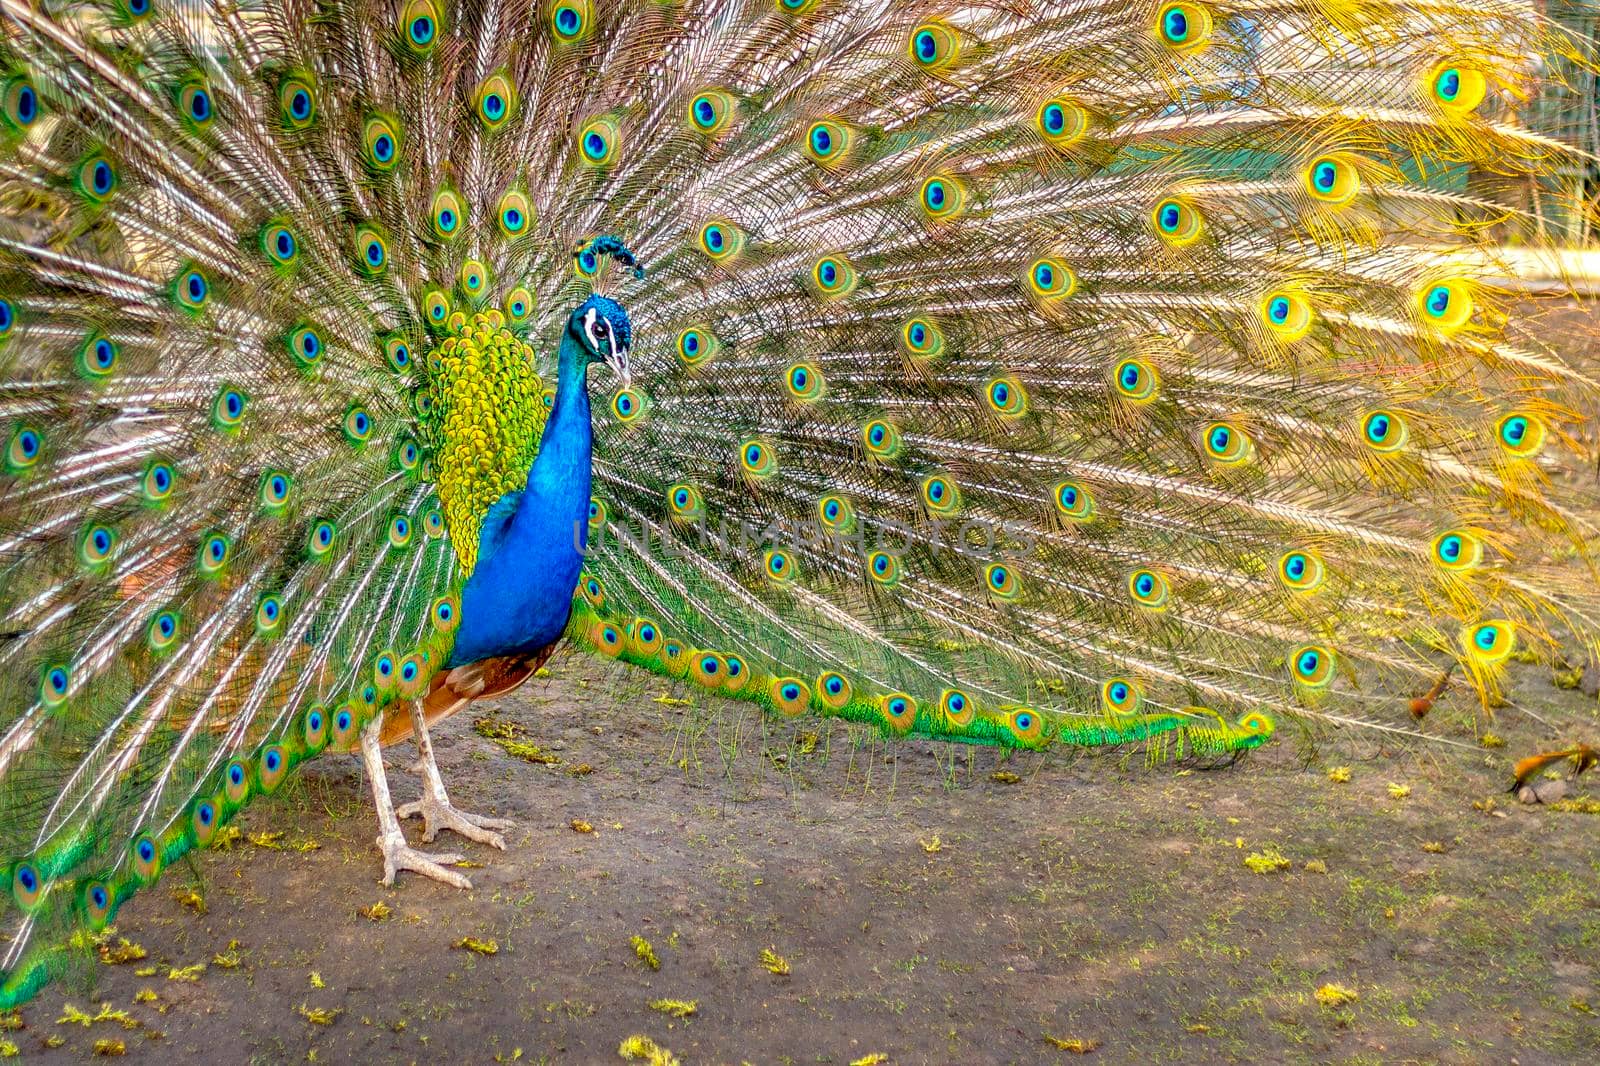 Peacock opened tail like fan. Beautiful plumage of male peacock. by Laguna781